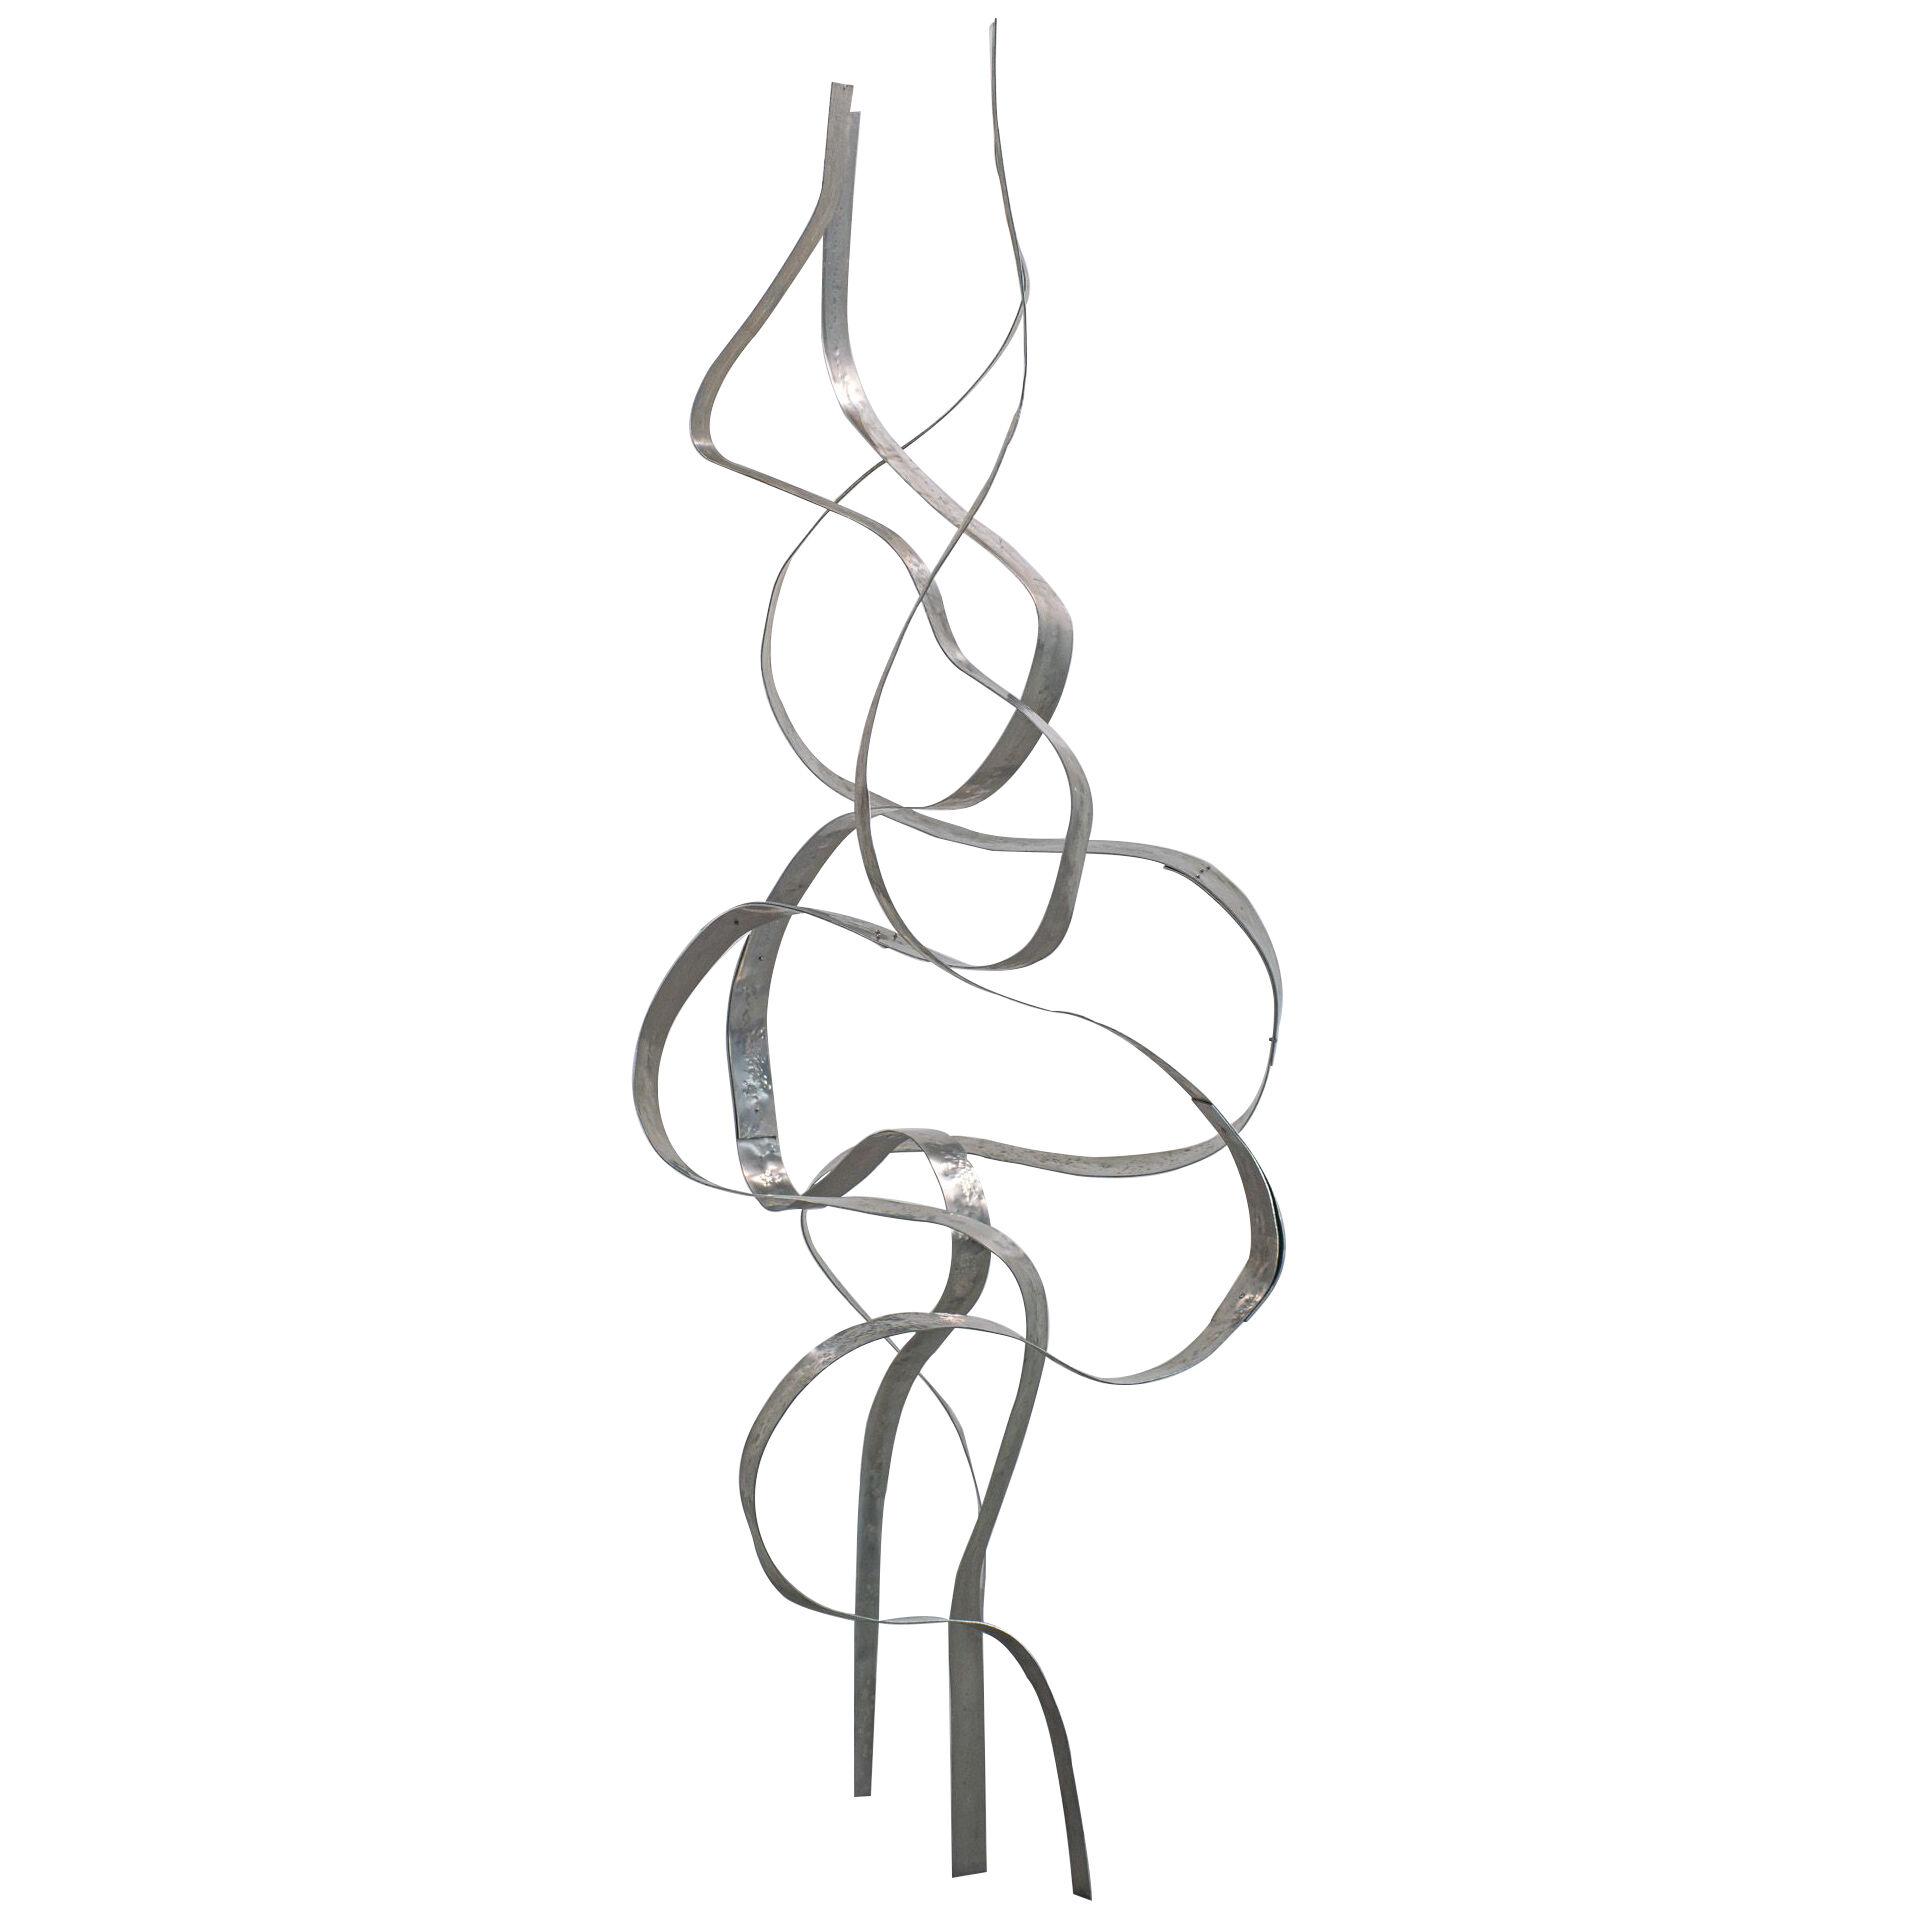 Kinetic Sculpture "Curves" #4